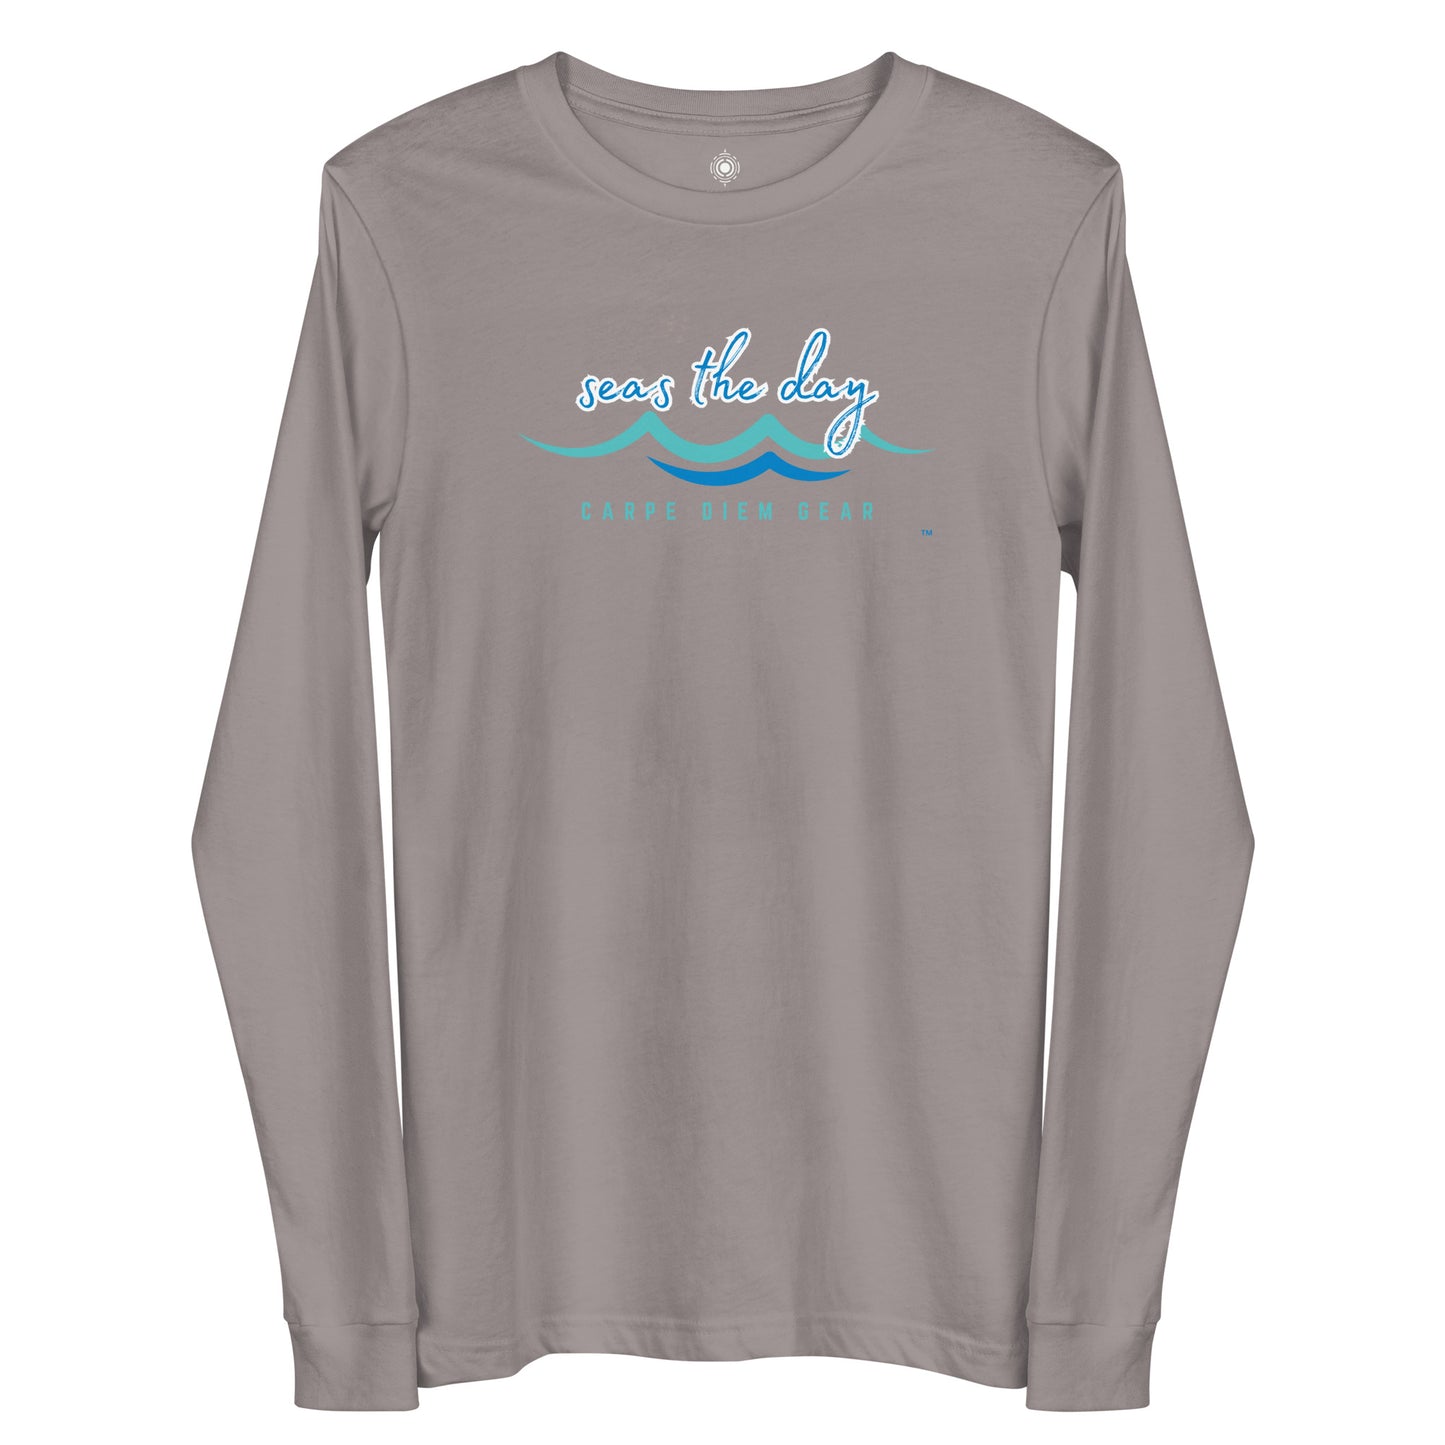 Carpe Diem Gear | Surf's Up | Surfing Water Color DELUXE | Unisex 100% Ring-Spun Cotton LONG Sleeve T-Shirt